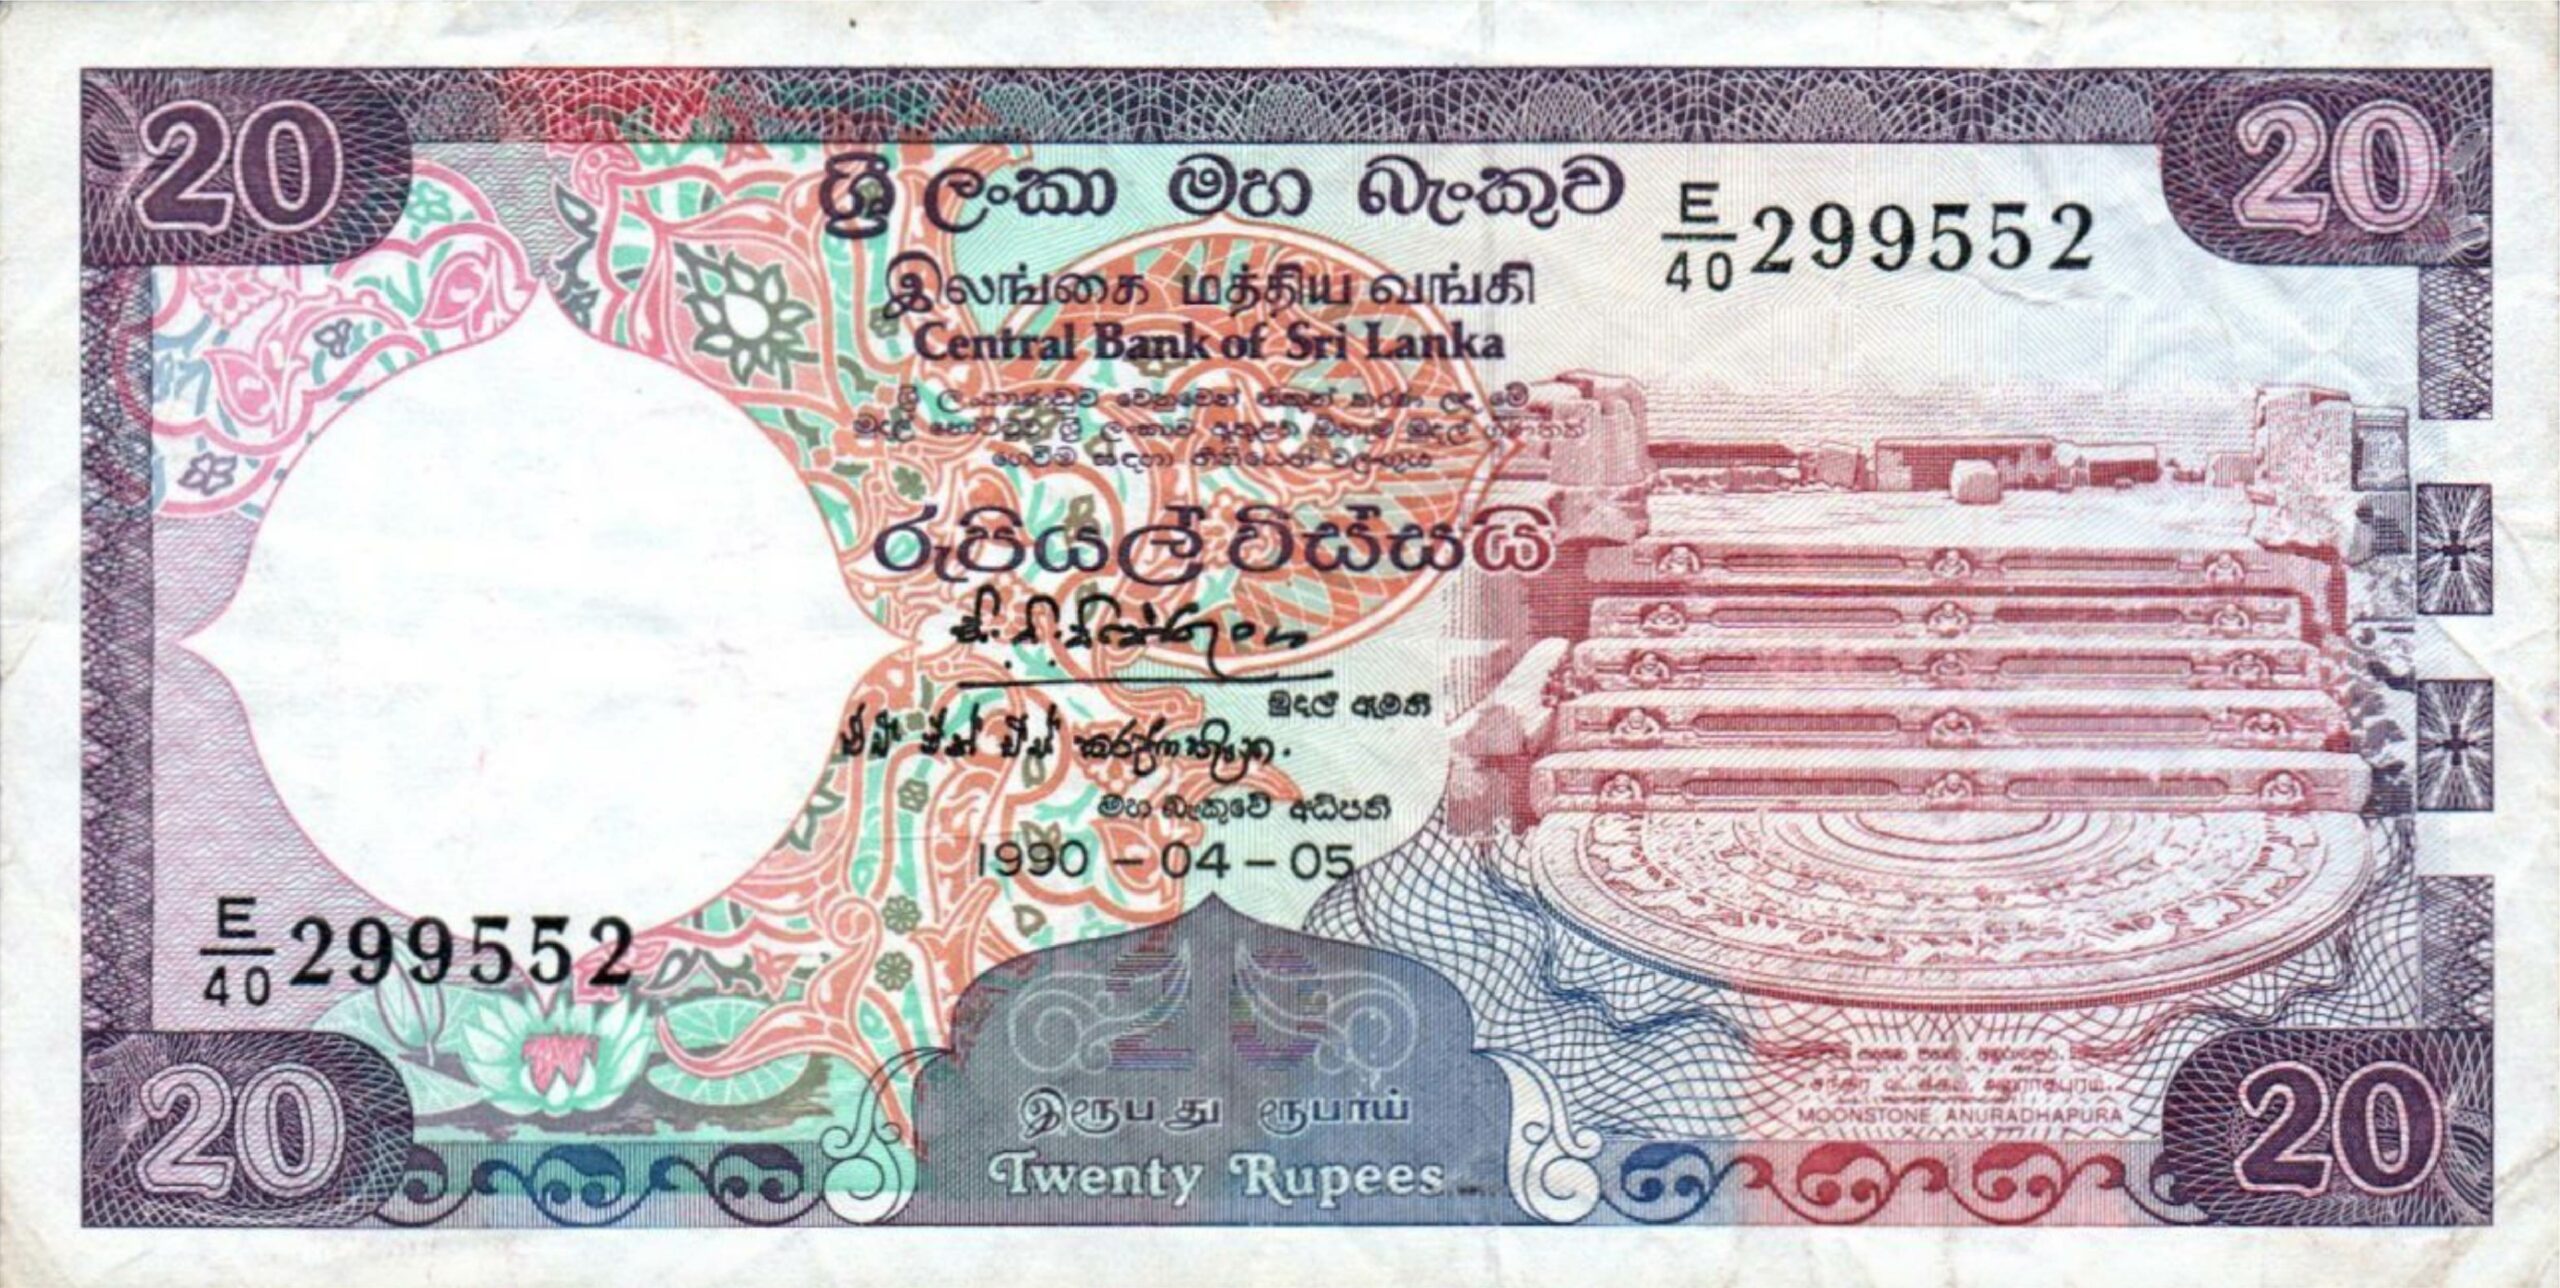 20 Sri Lankan rupees banknote (Moonstone)